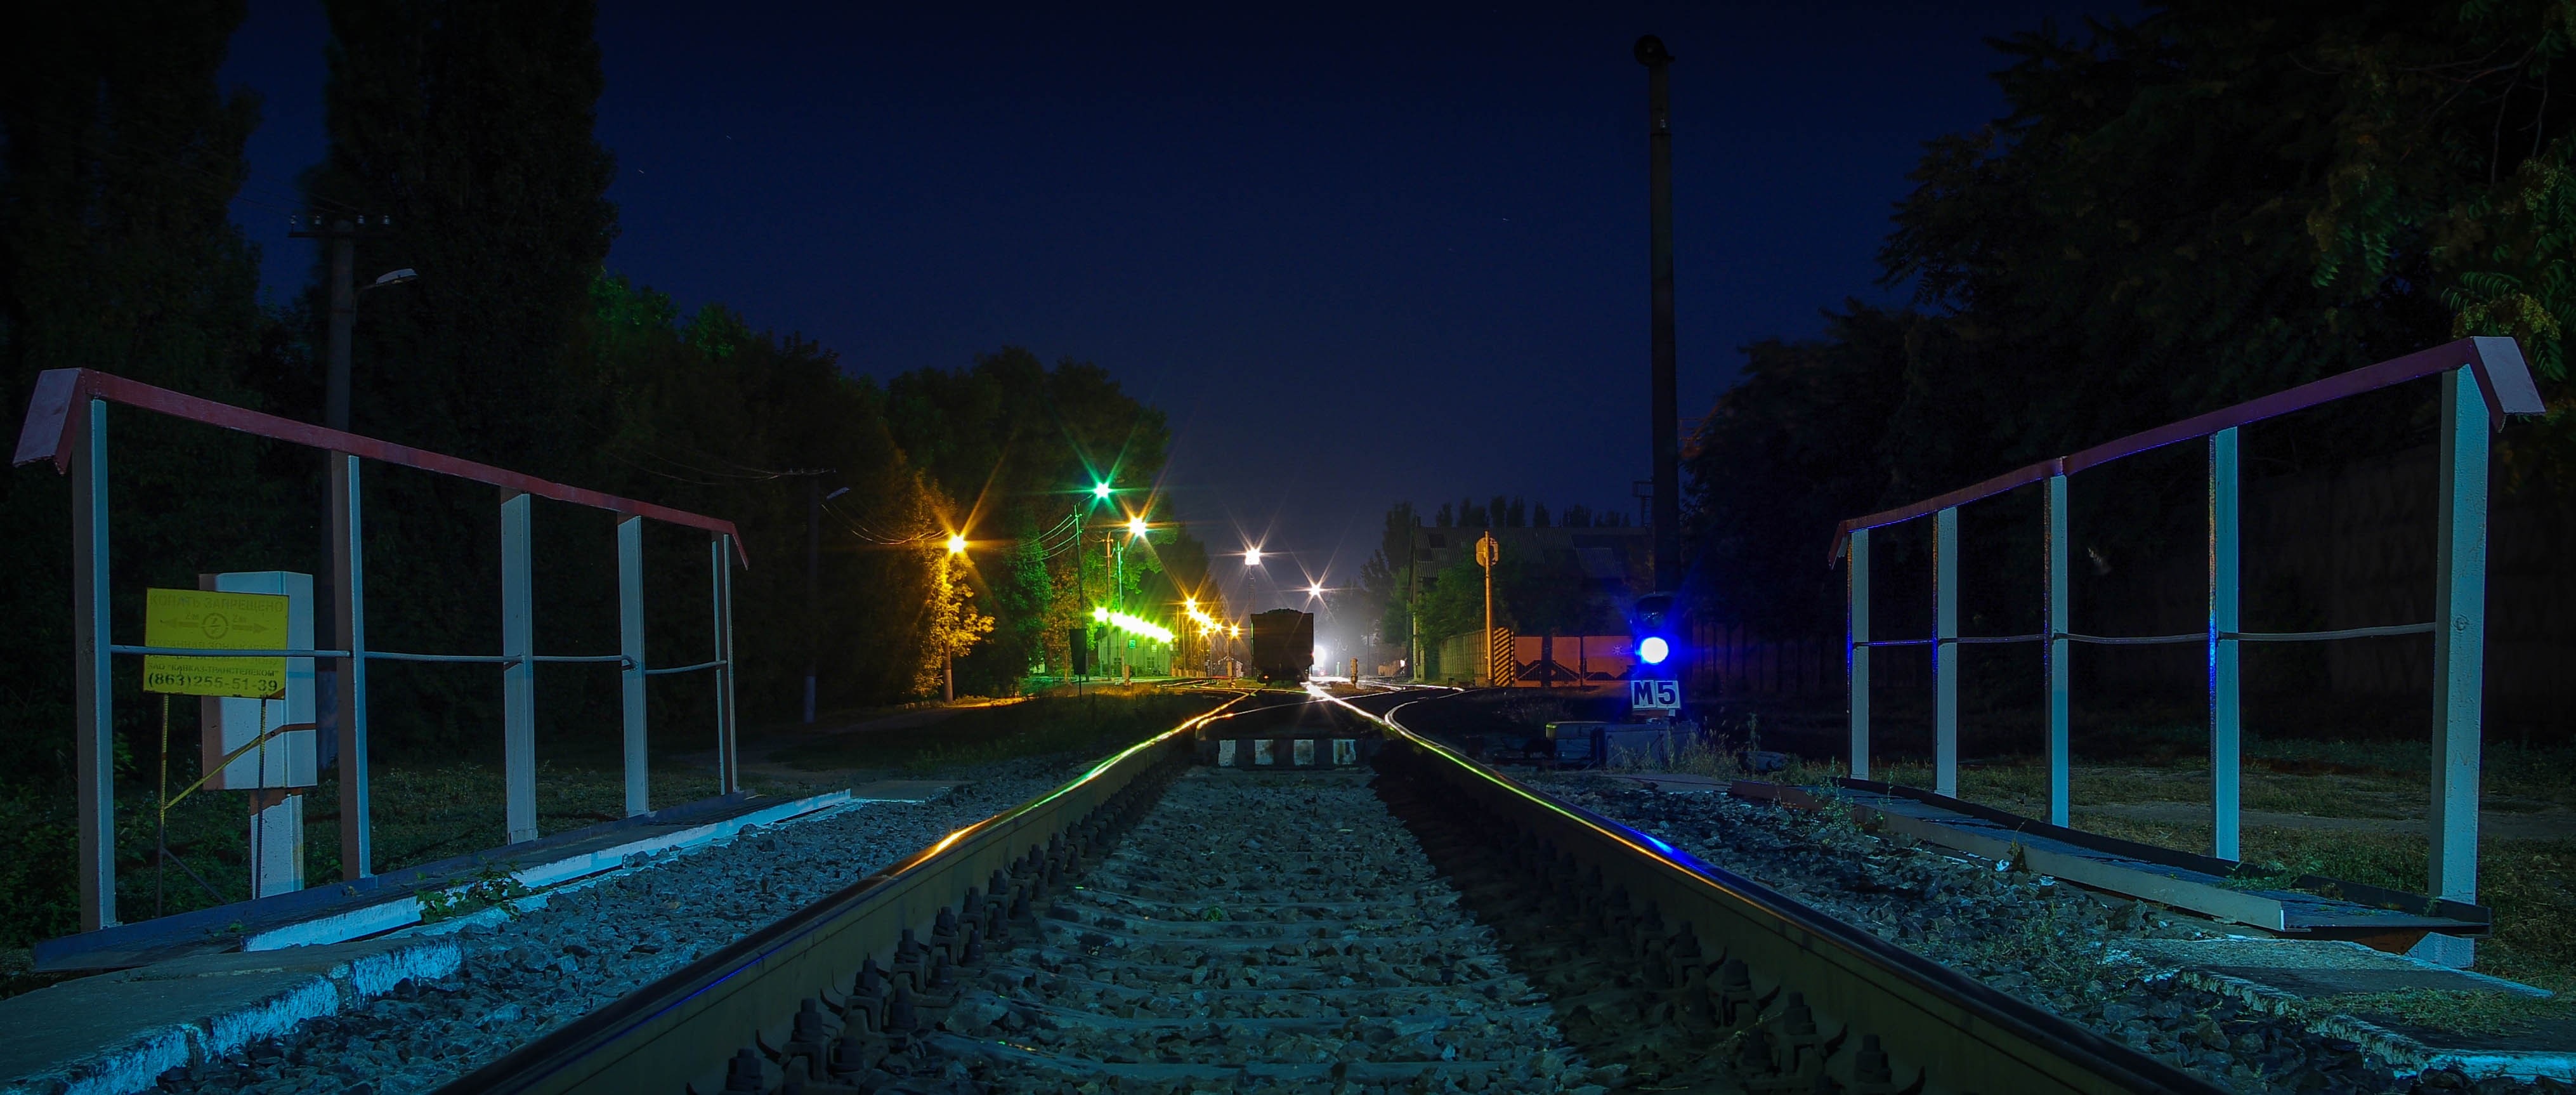 General 4061x1726 night lights metal railway low light ultrawide Russia train street light sky